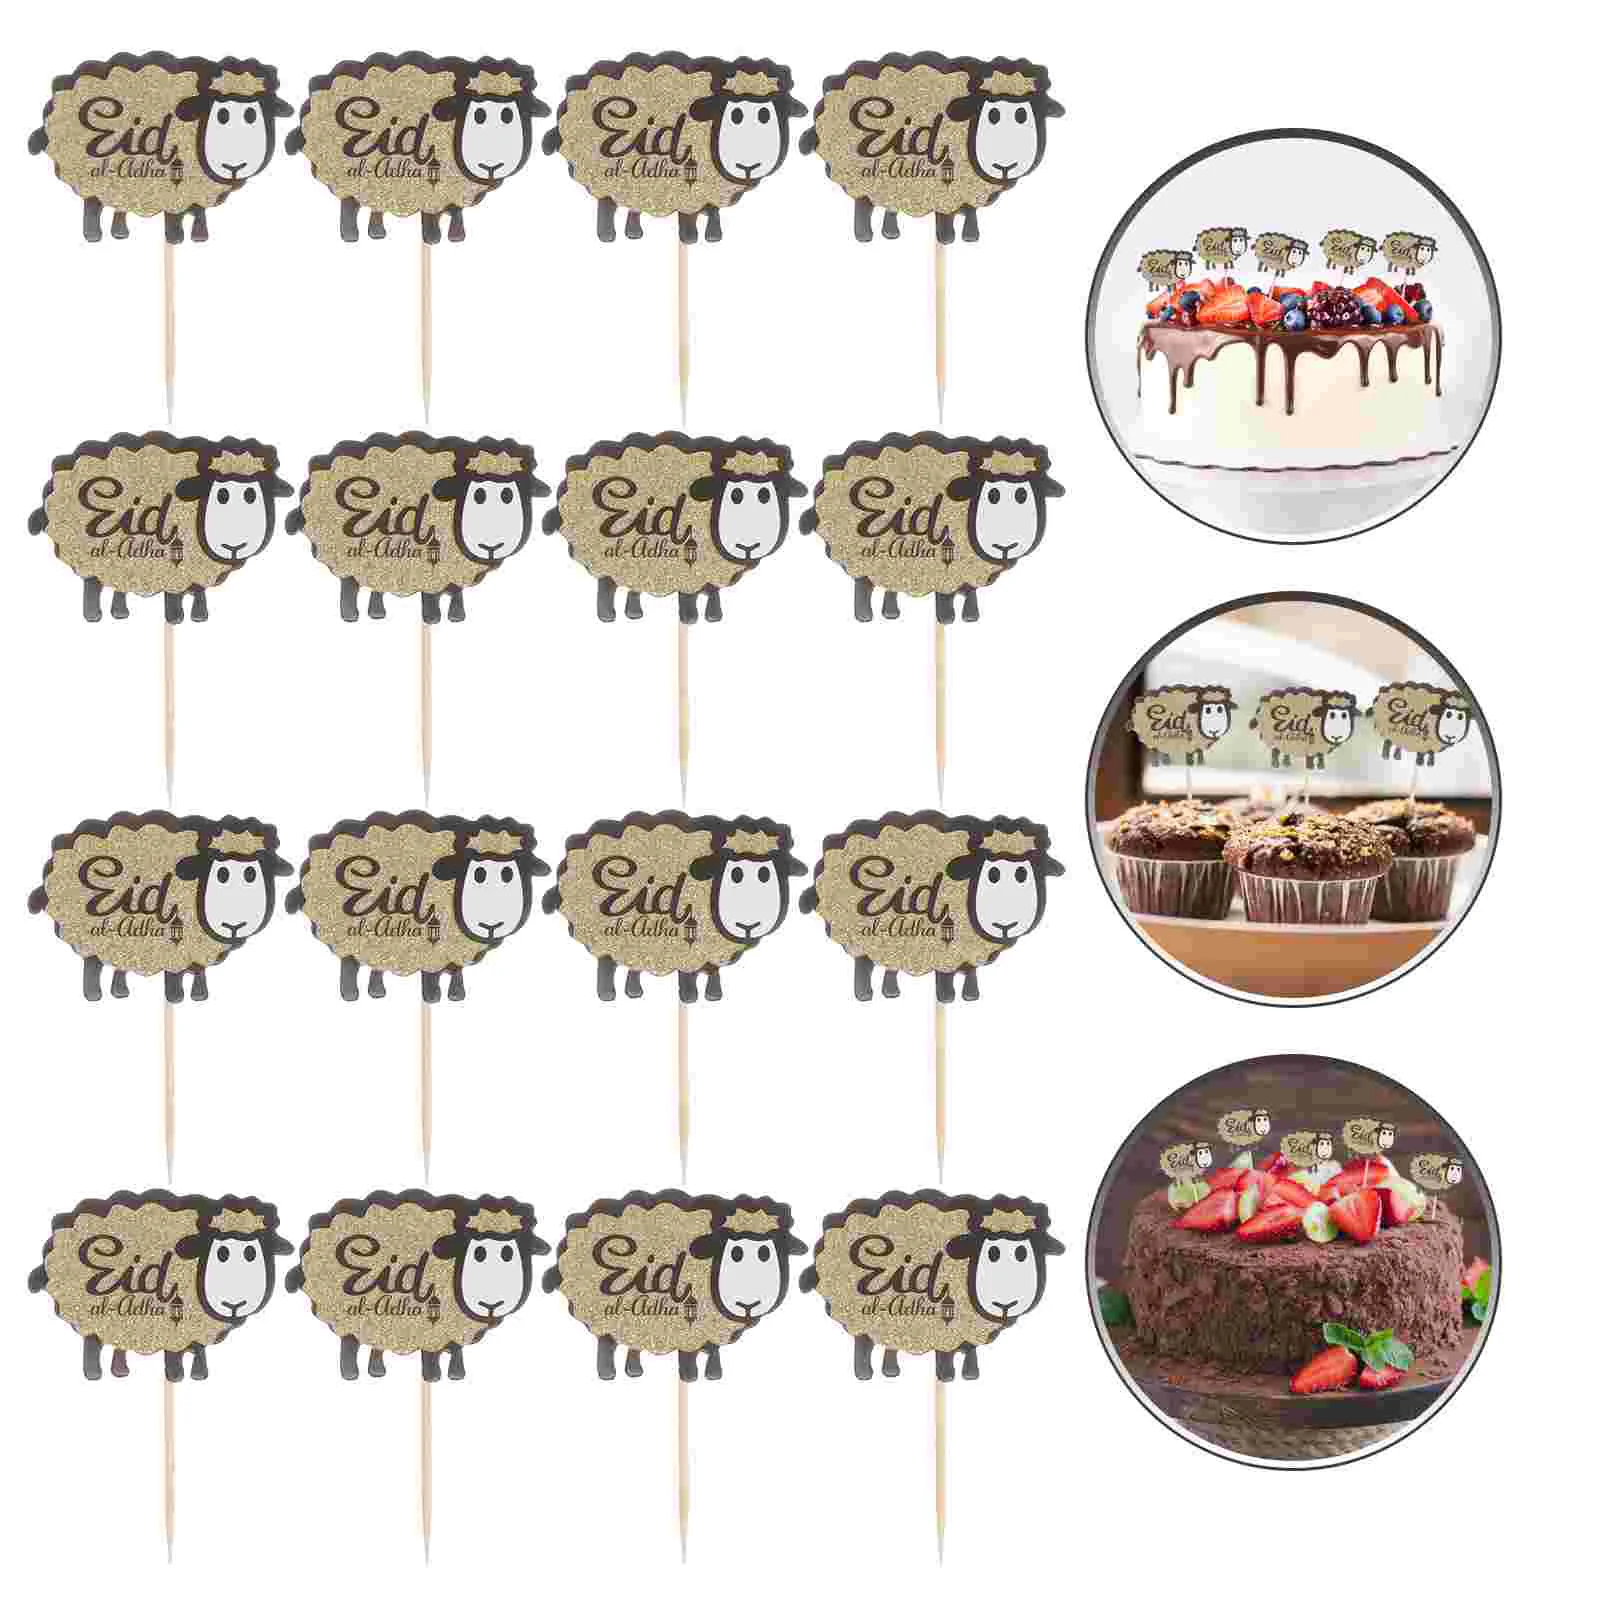 

24 Pcs Cake Decorative Props Eid Mubarak Picks Moon Decorations Day Farm Animals Cupcake Lamb Inserts Toppers Party Ornaments